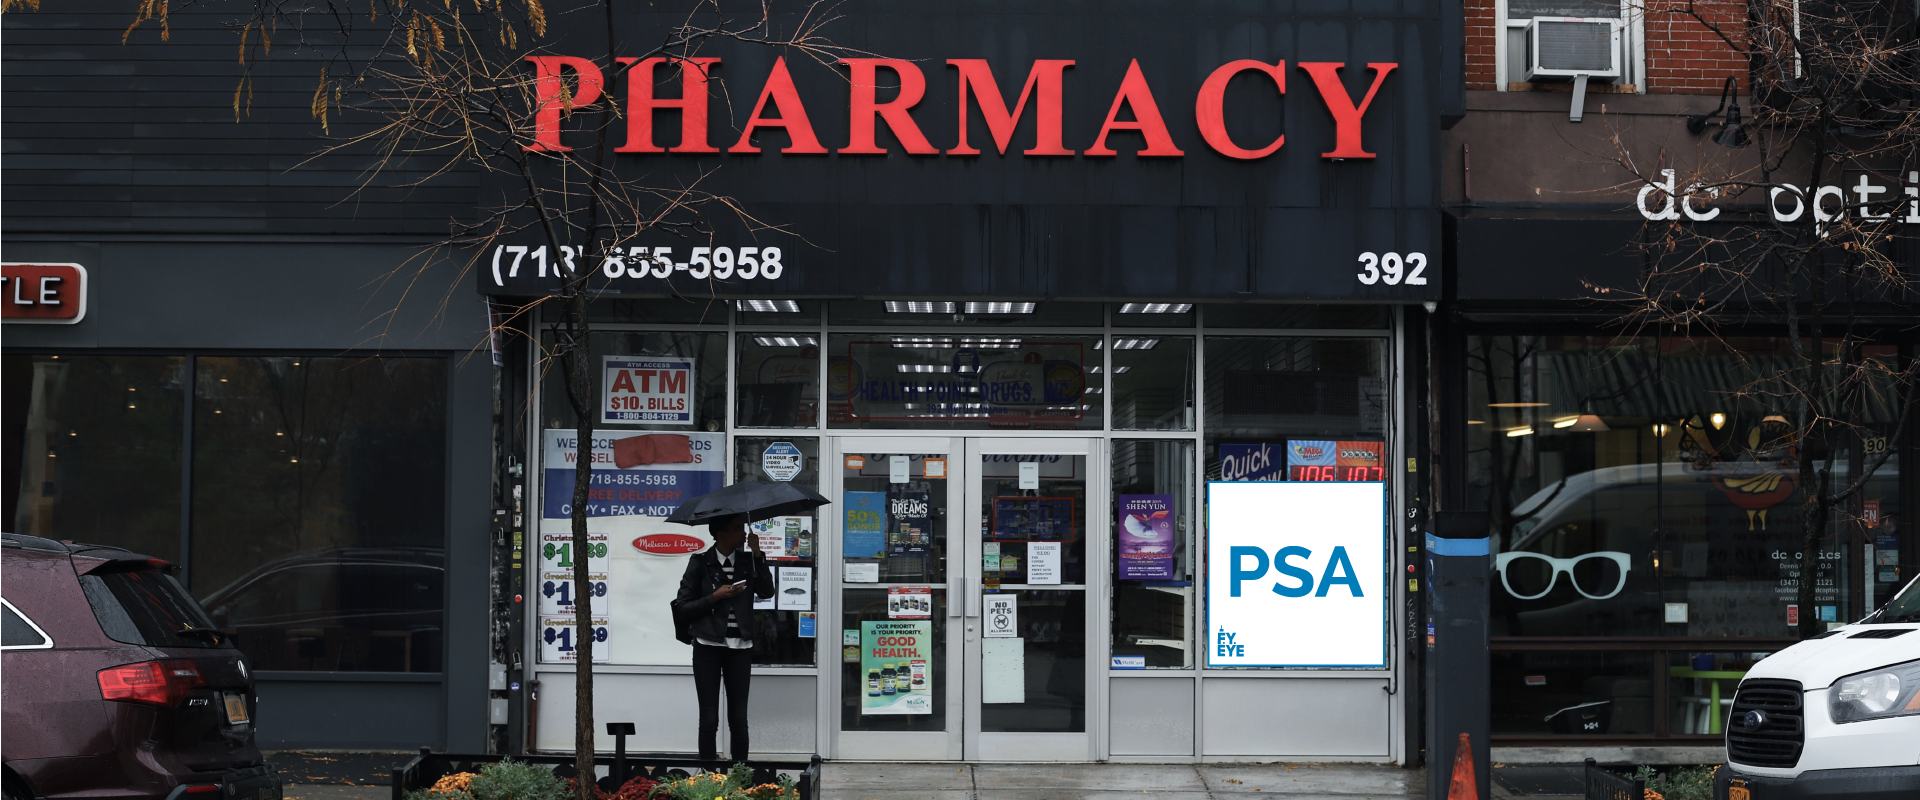 Pharmacies image